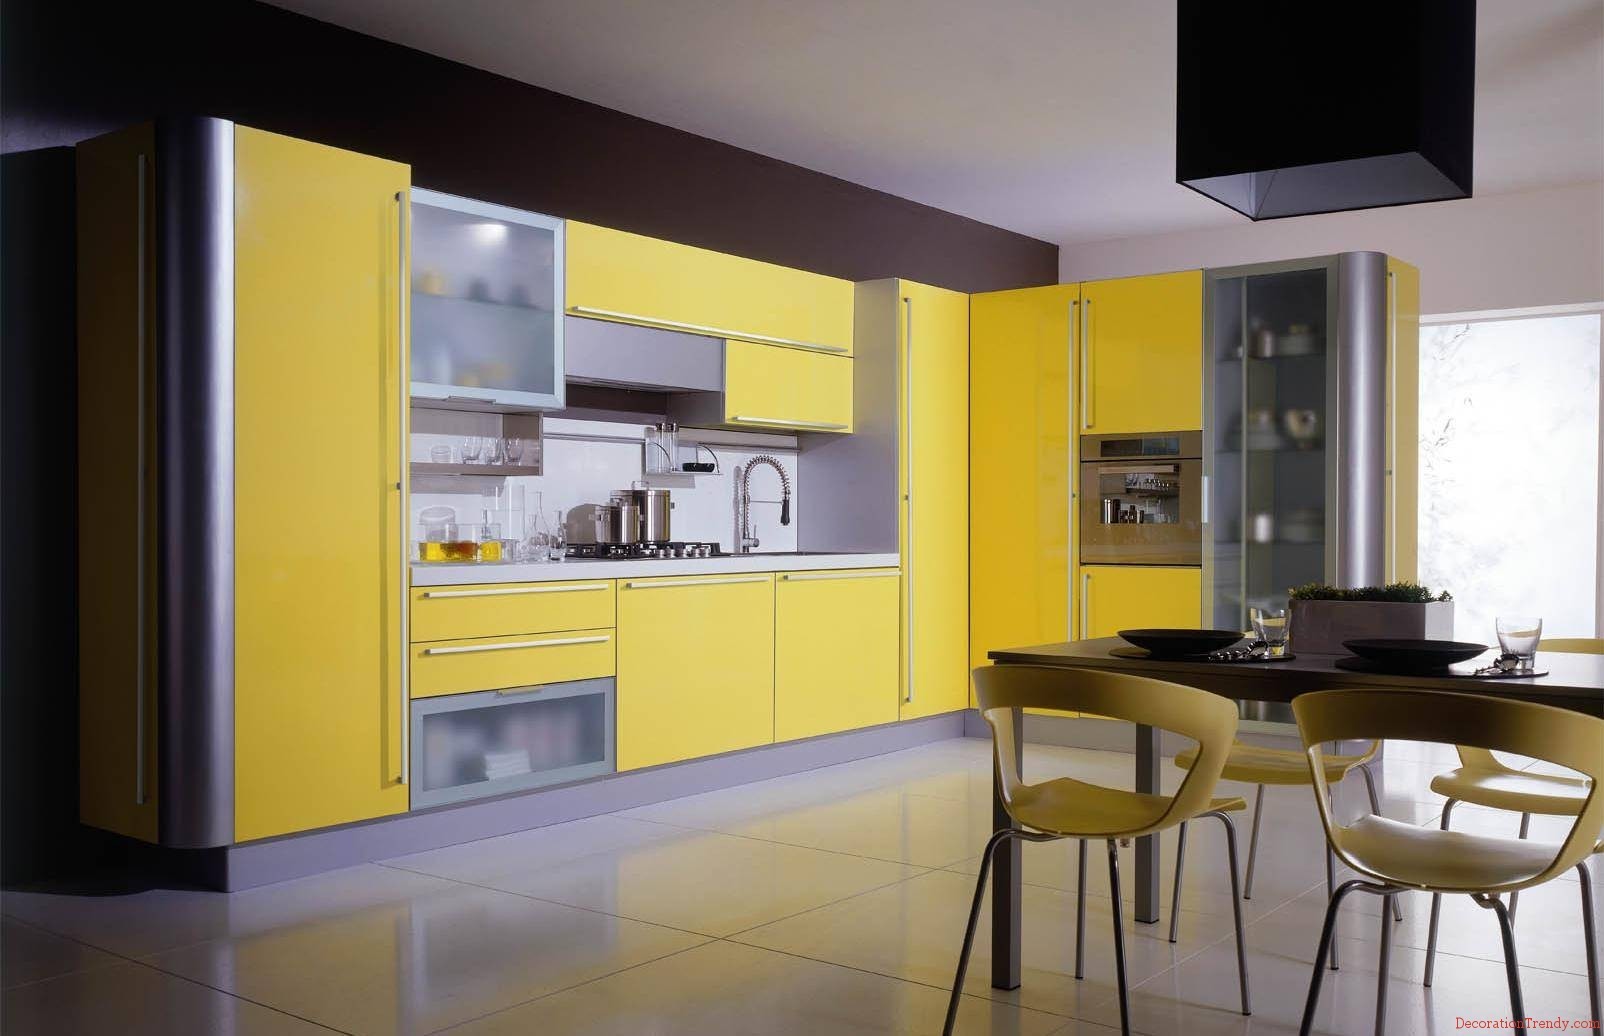 Купить желтую кухню. Кухонный гарнитур желтого цвета. Яркий кухонный гарнитур. Кухня в желтом цвете. Кухня горчичного цвета.